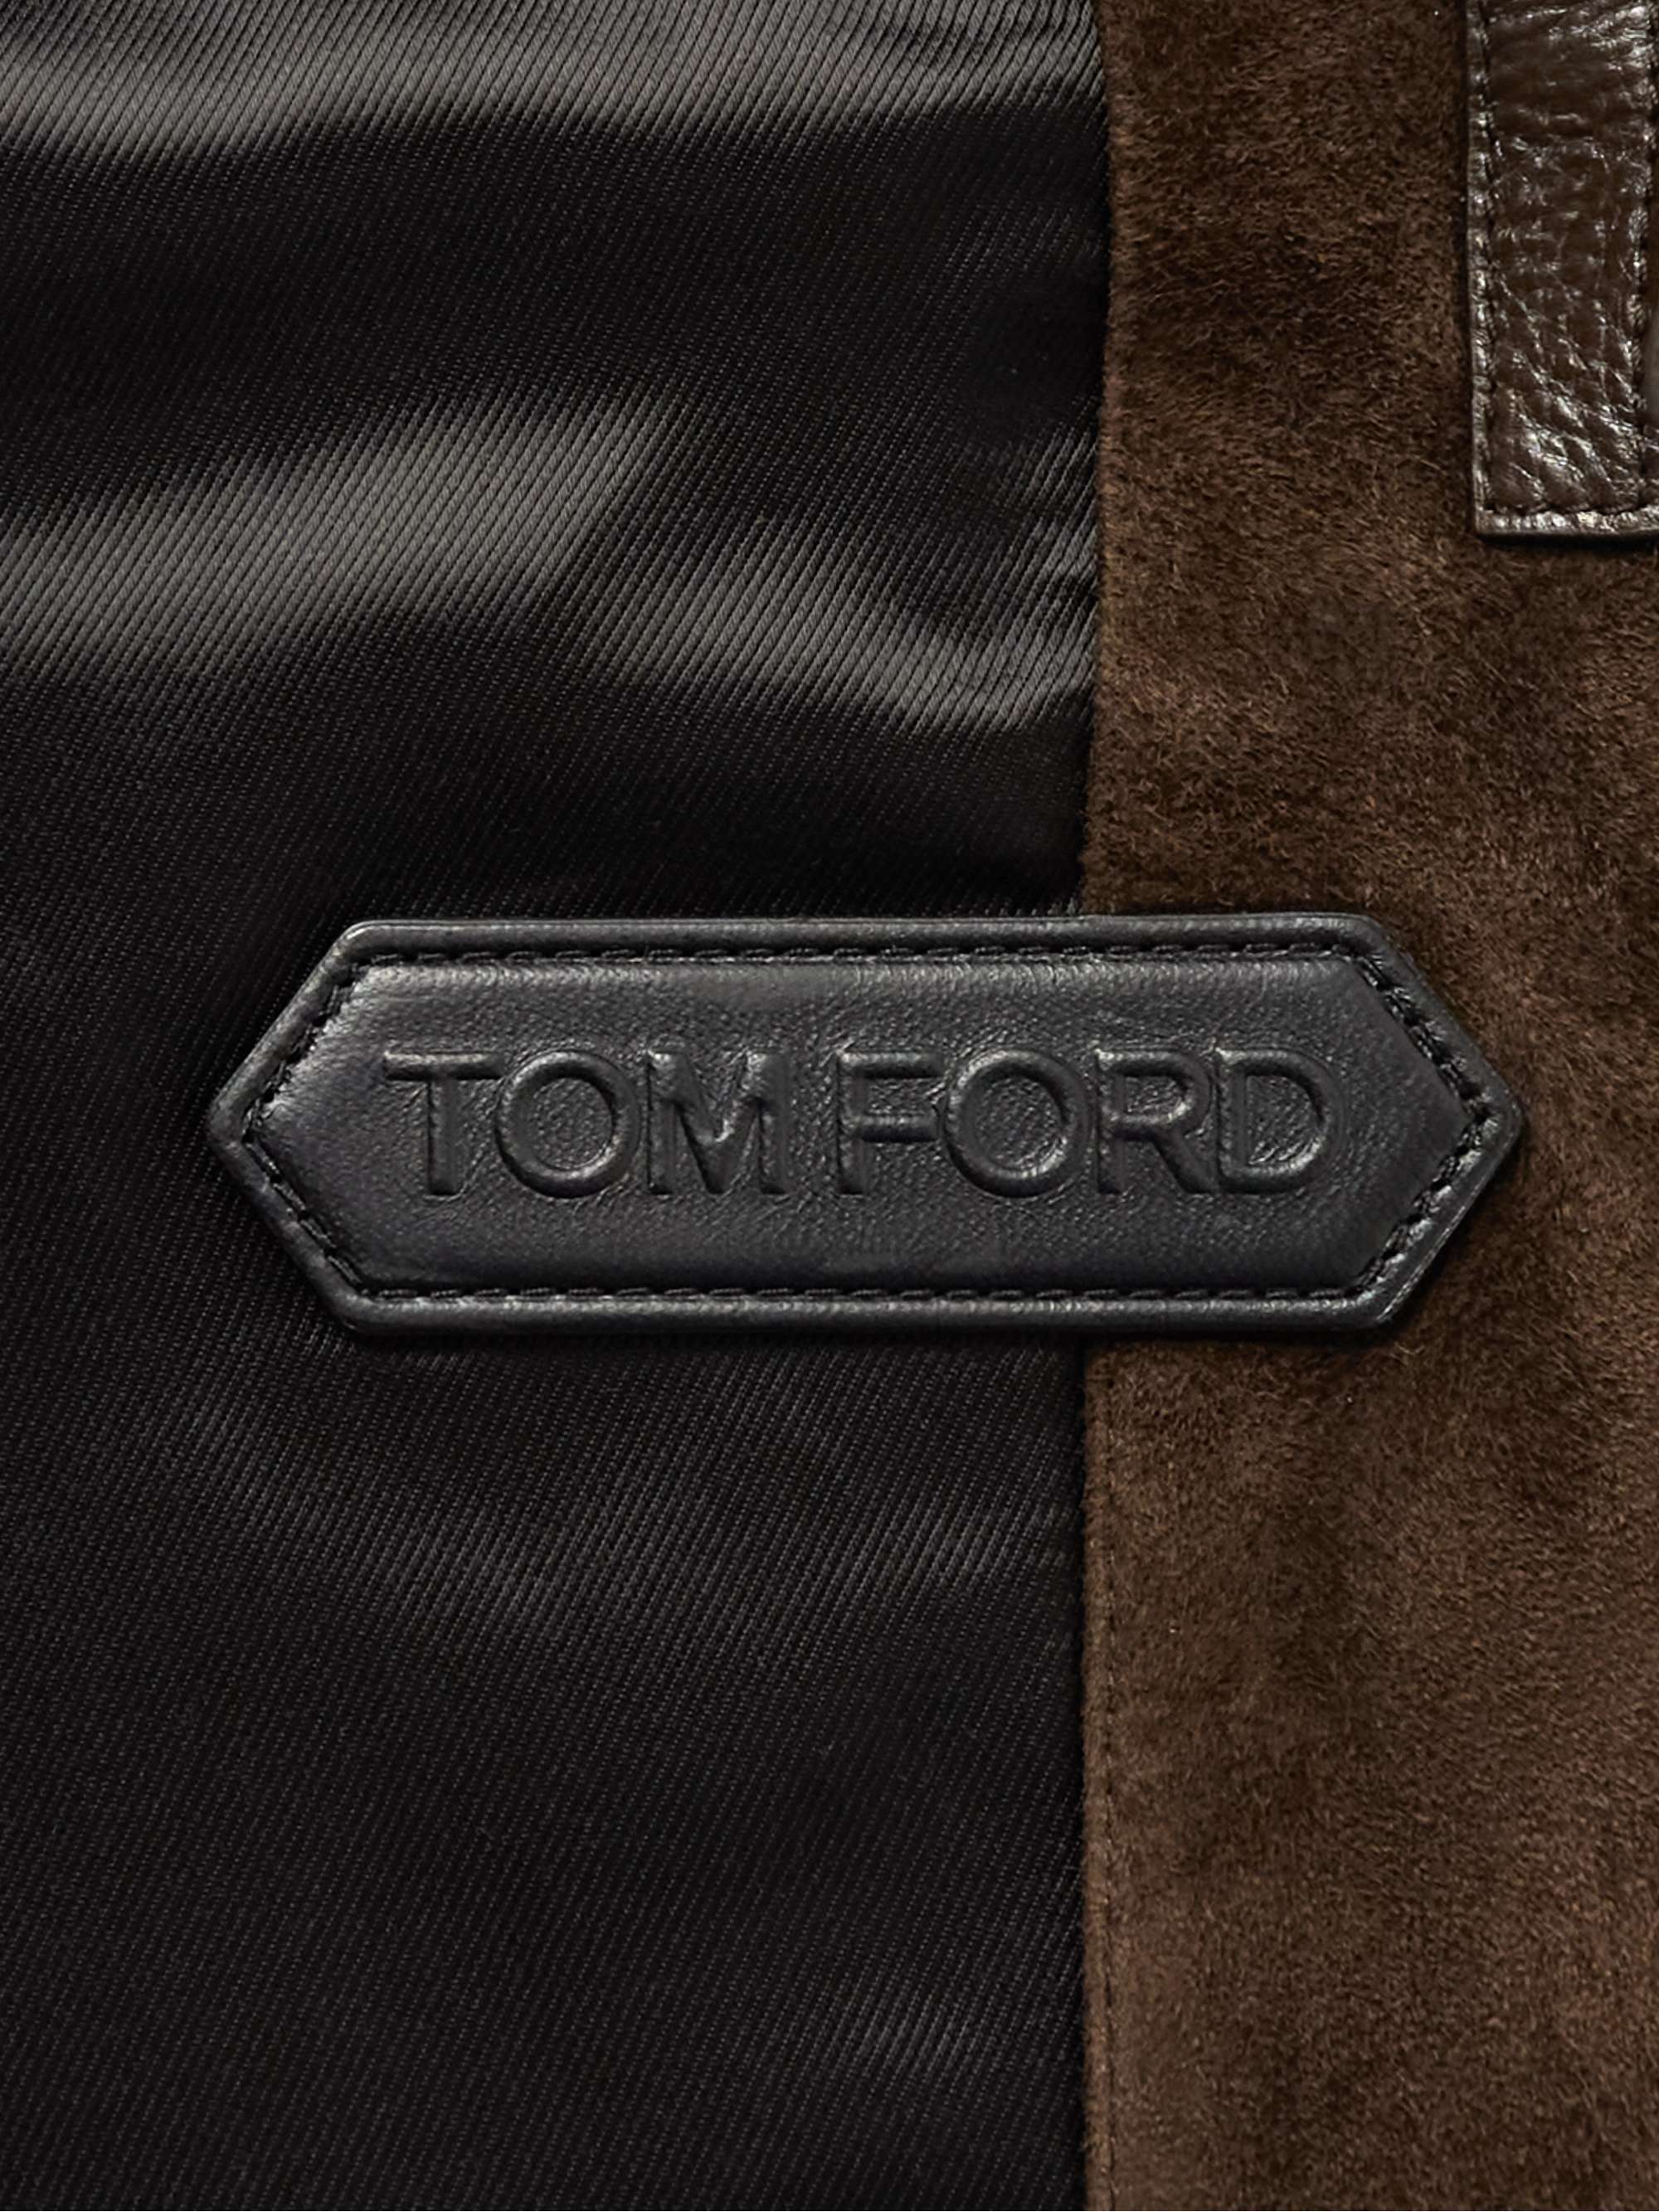 TOM FORD Leather-Trimmed Suede Blazer